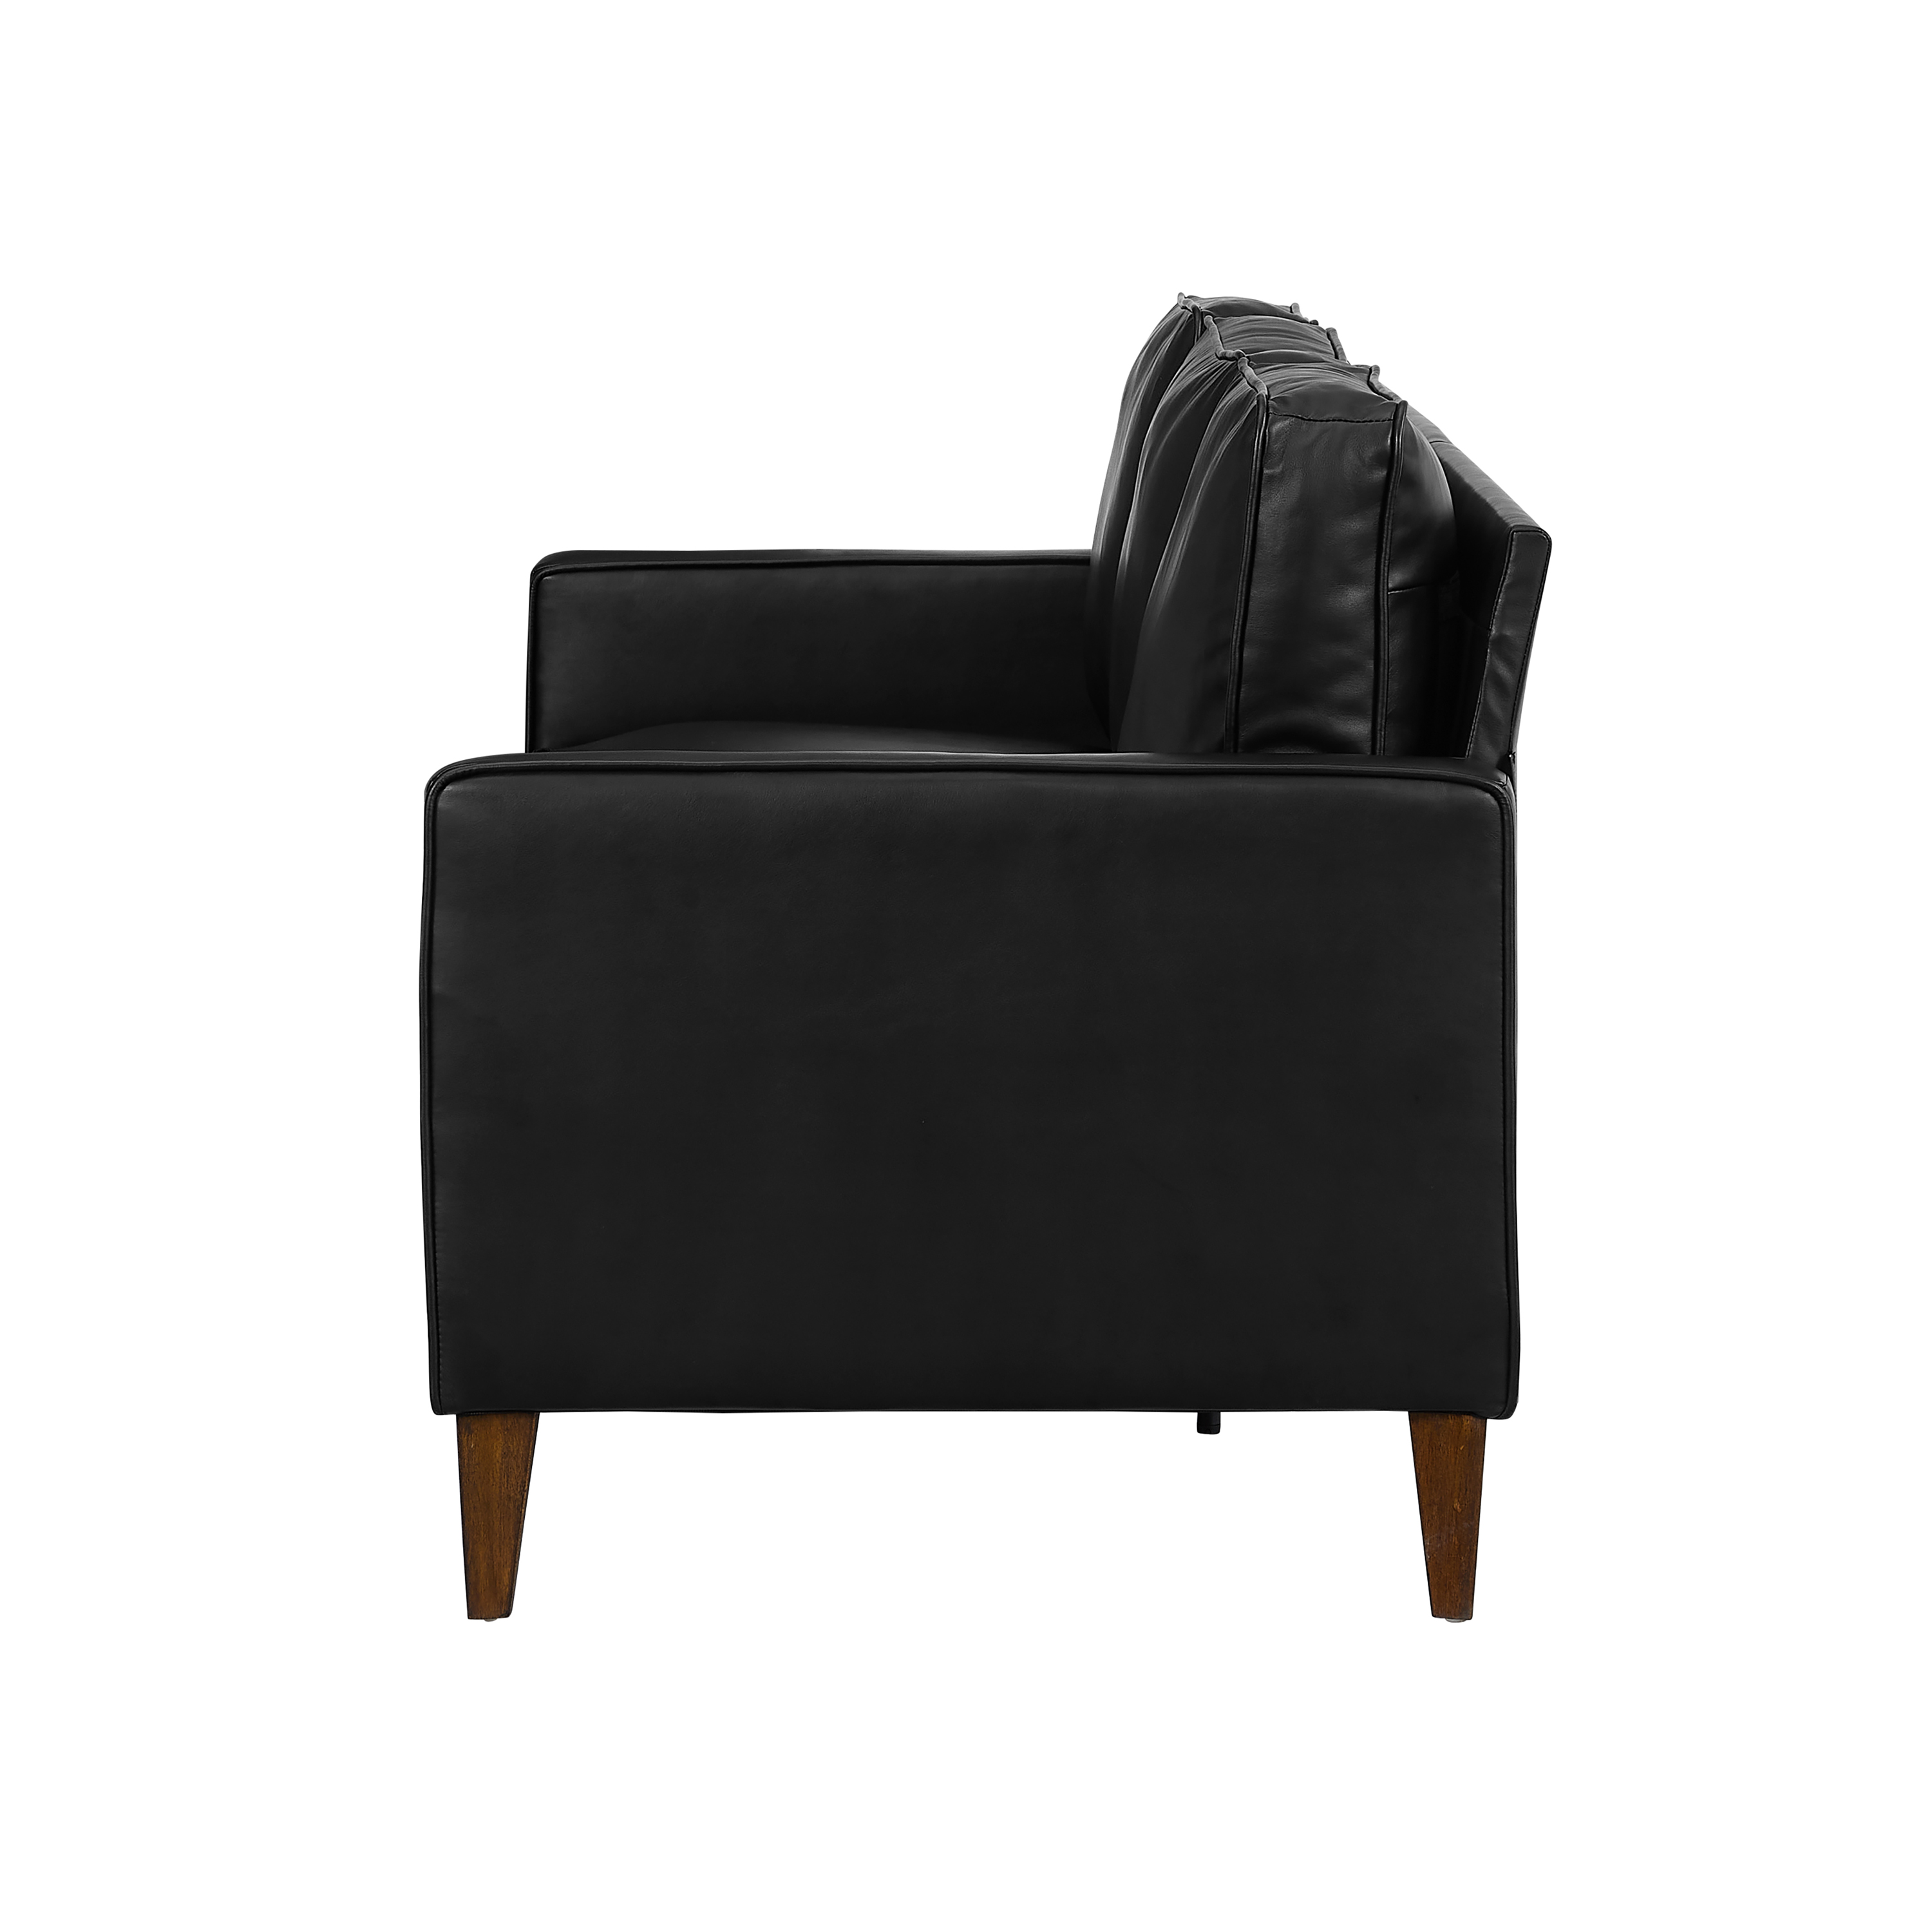 Hillsdale Jianna Faux Leather Sofa, Black - image 10 of 12